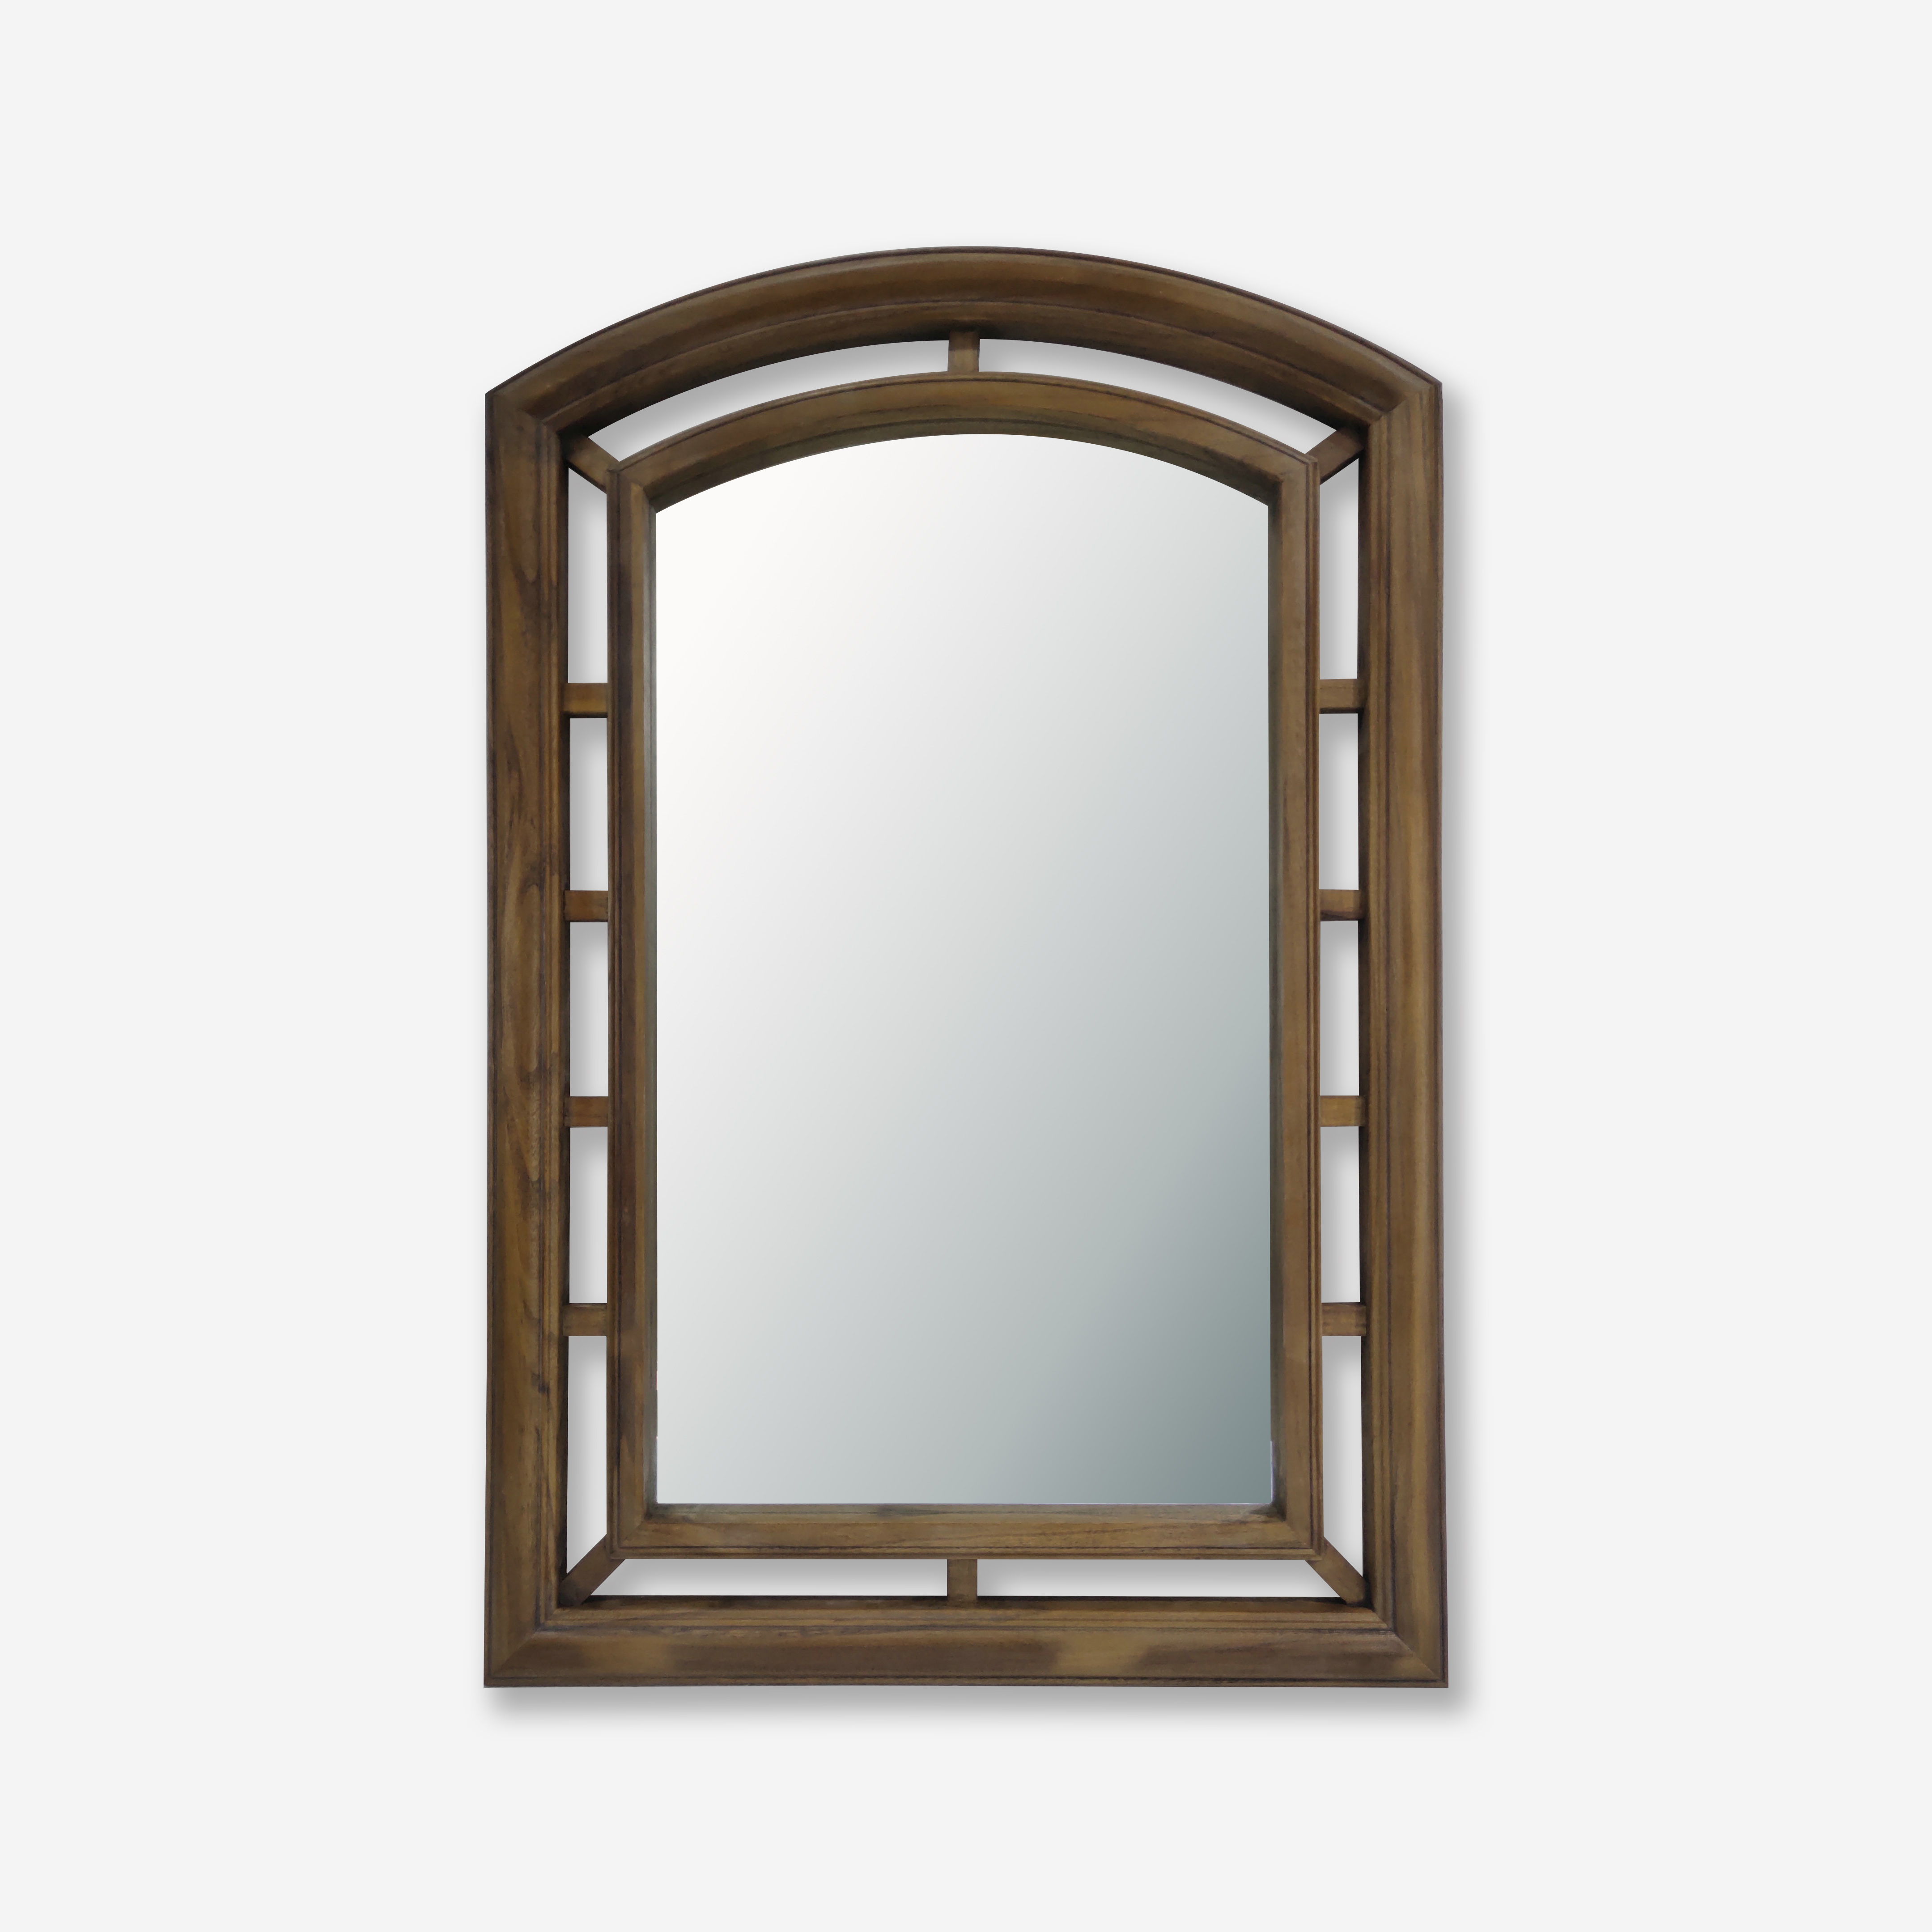 wooden mirror frames for crafts